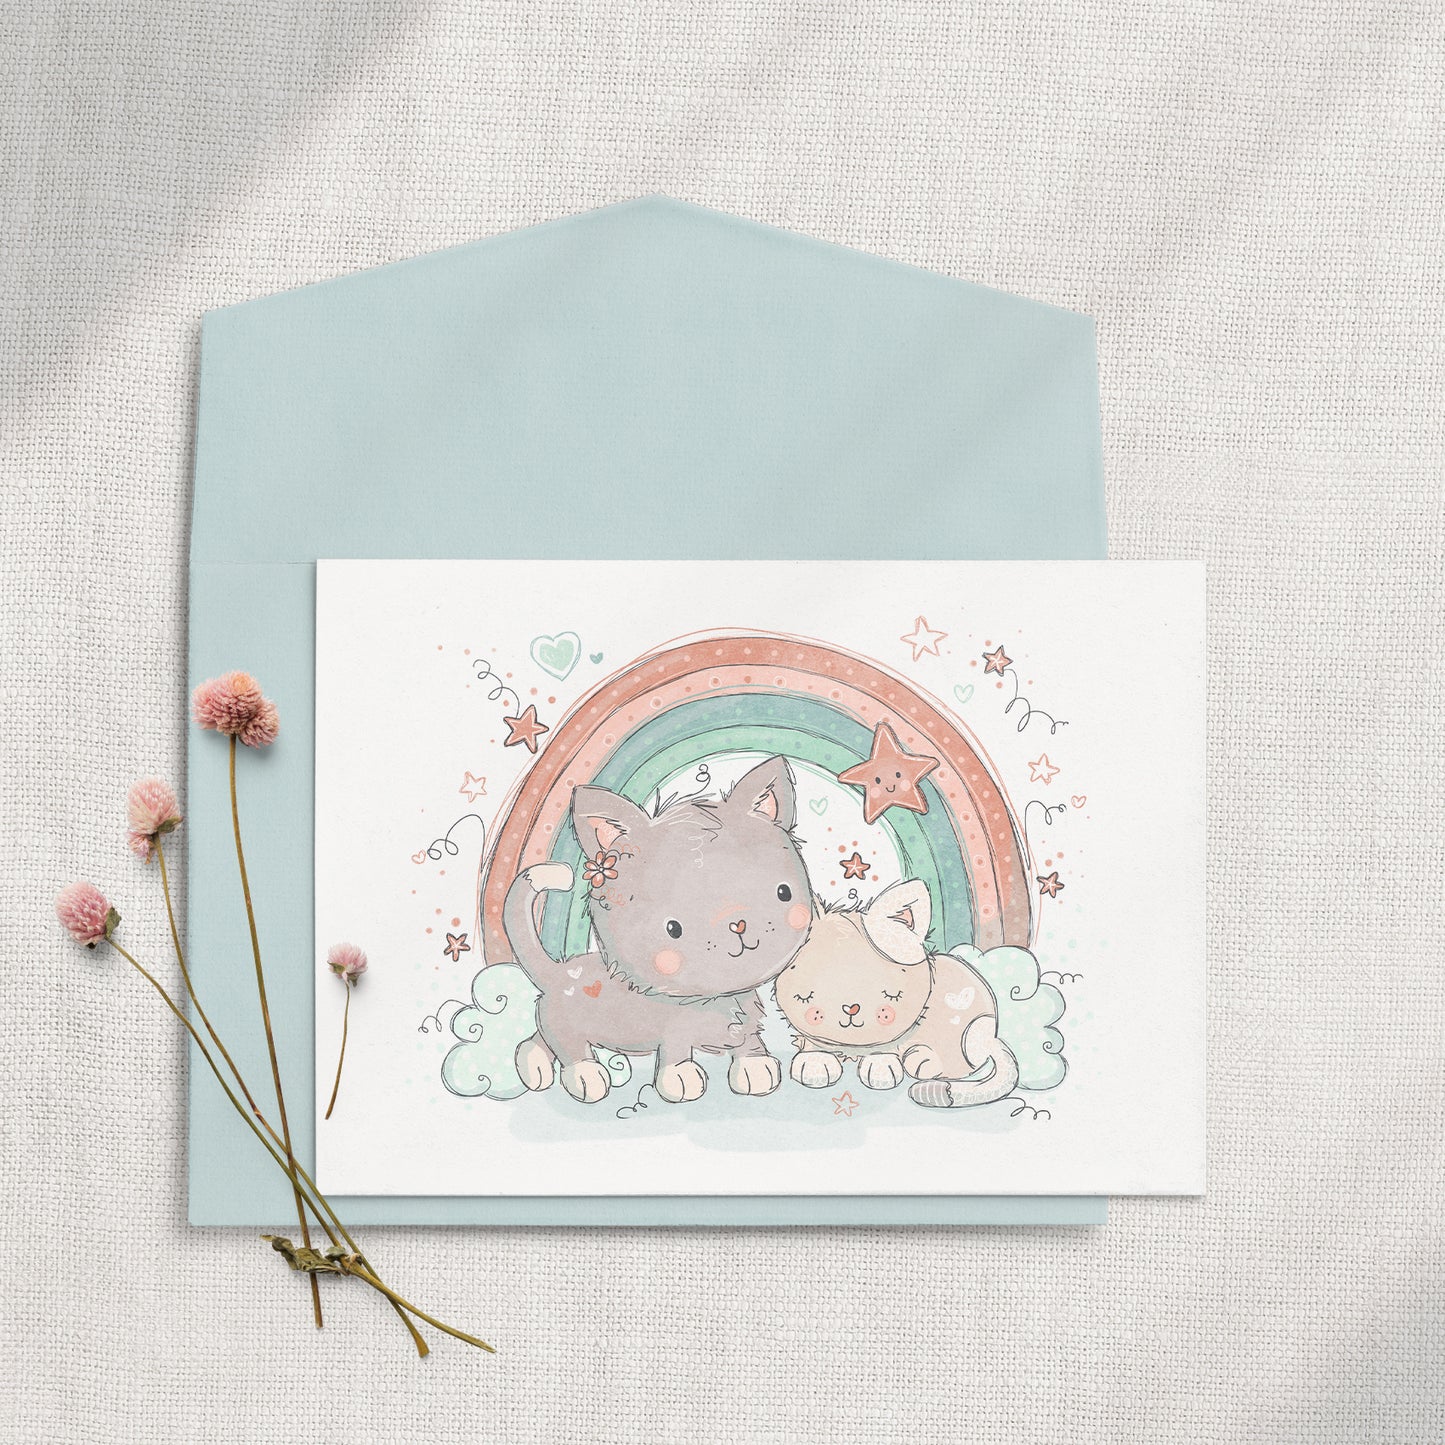 Kittens & Rainbows 5x7 Greeting Card